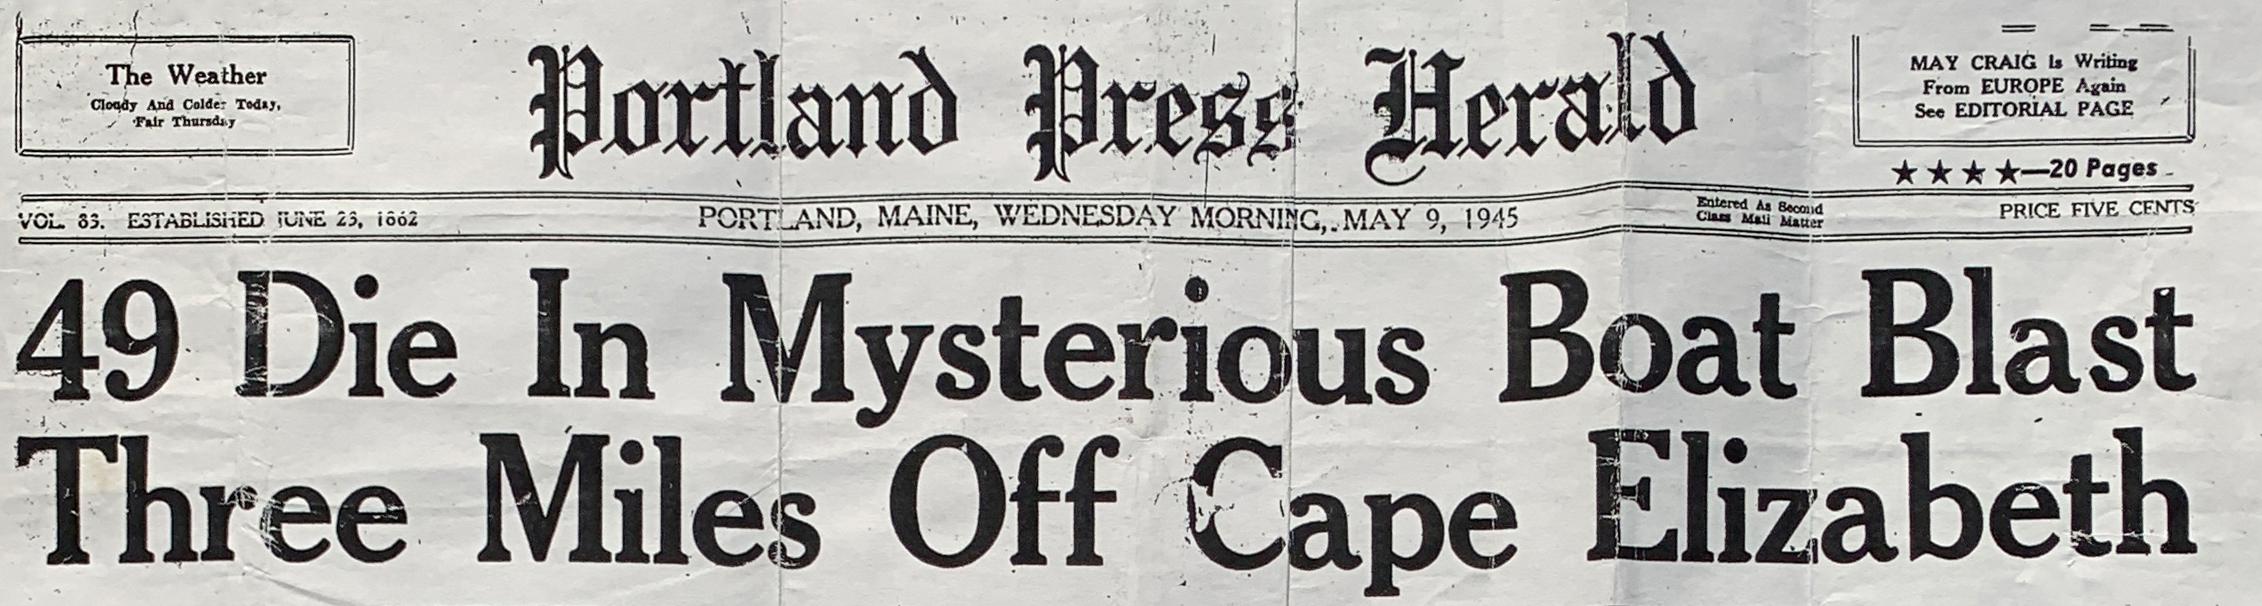 Embed 1 Portland Press Harold May 9 1945 Headline